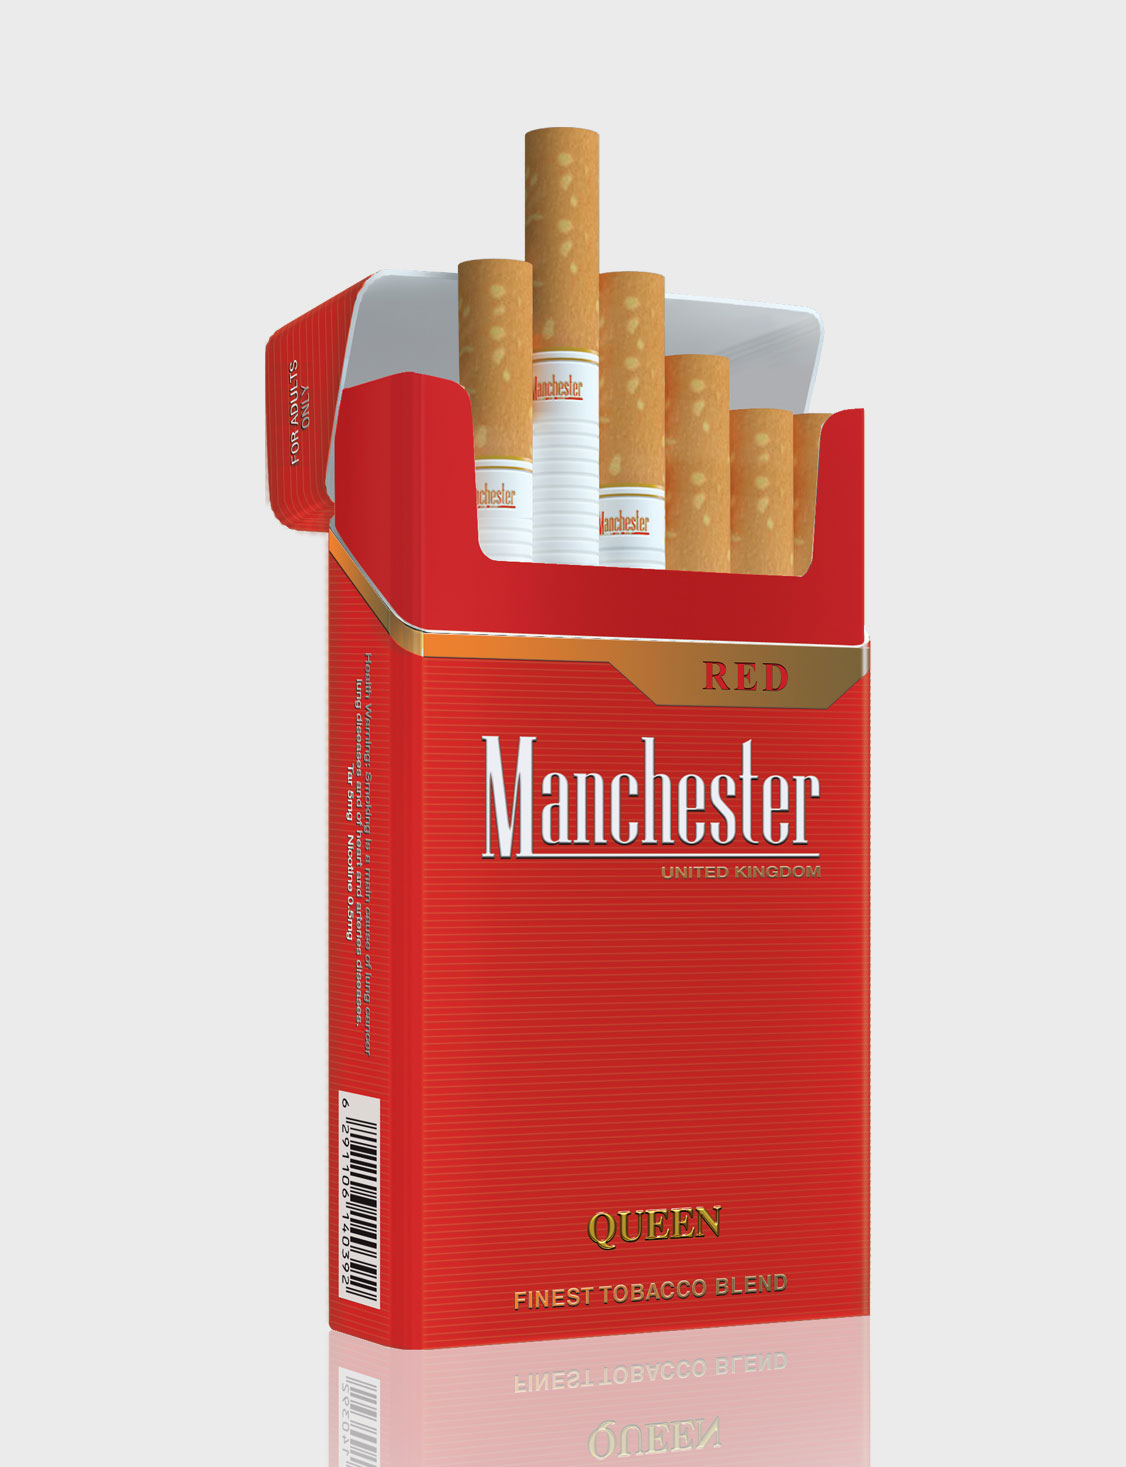 Манчестер компакт. Сигареты Манчестер компакт ред. Сигареты Manchester Queen Red компакт. Manchester KS Red сигареты. Манчестер Юнайтед Киндом сигареты.